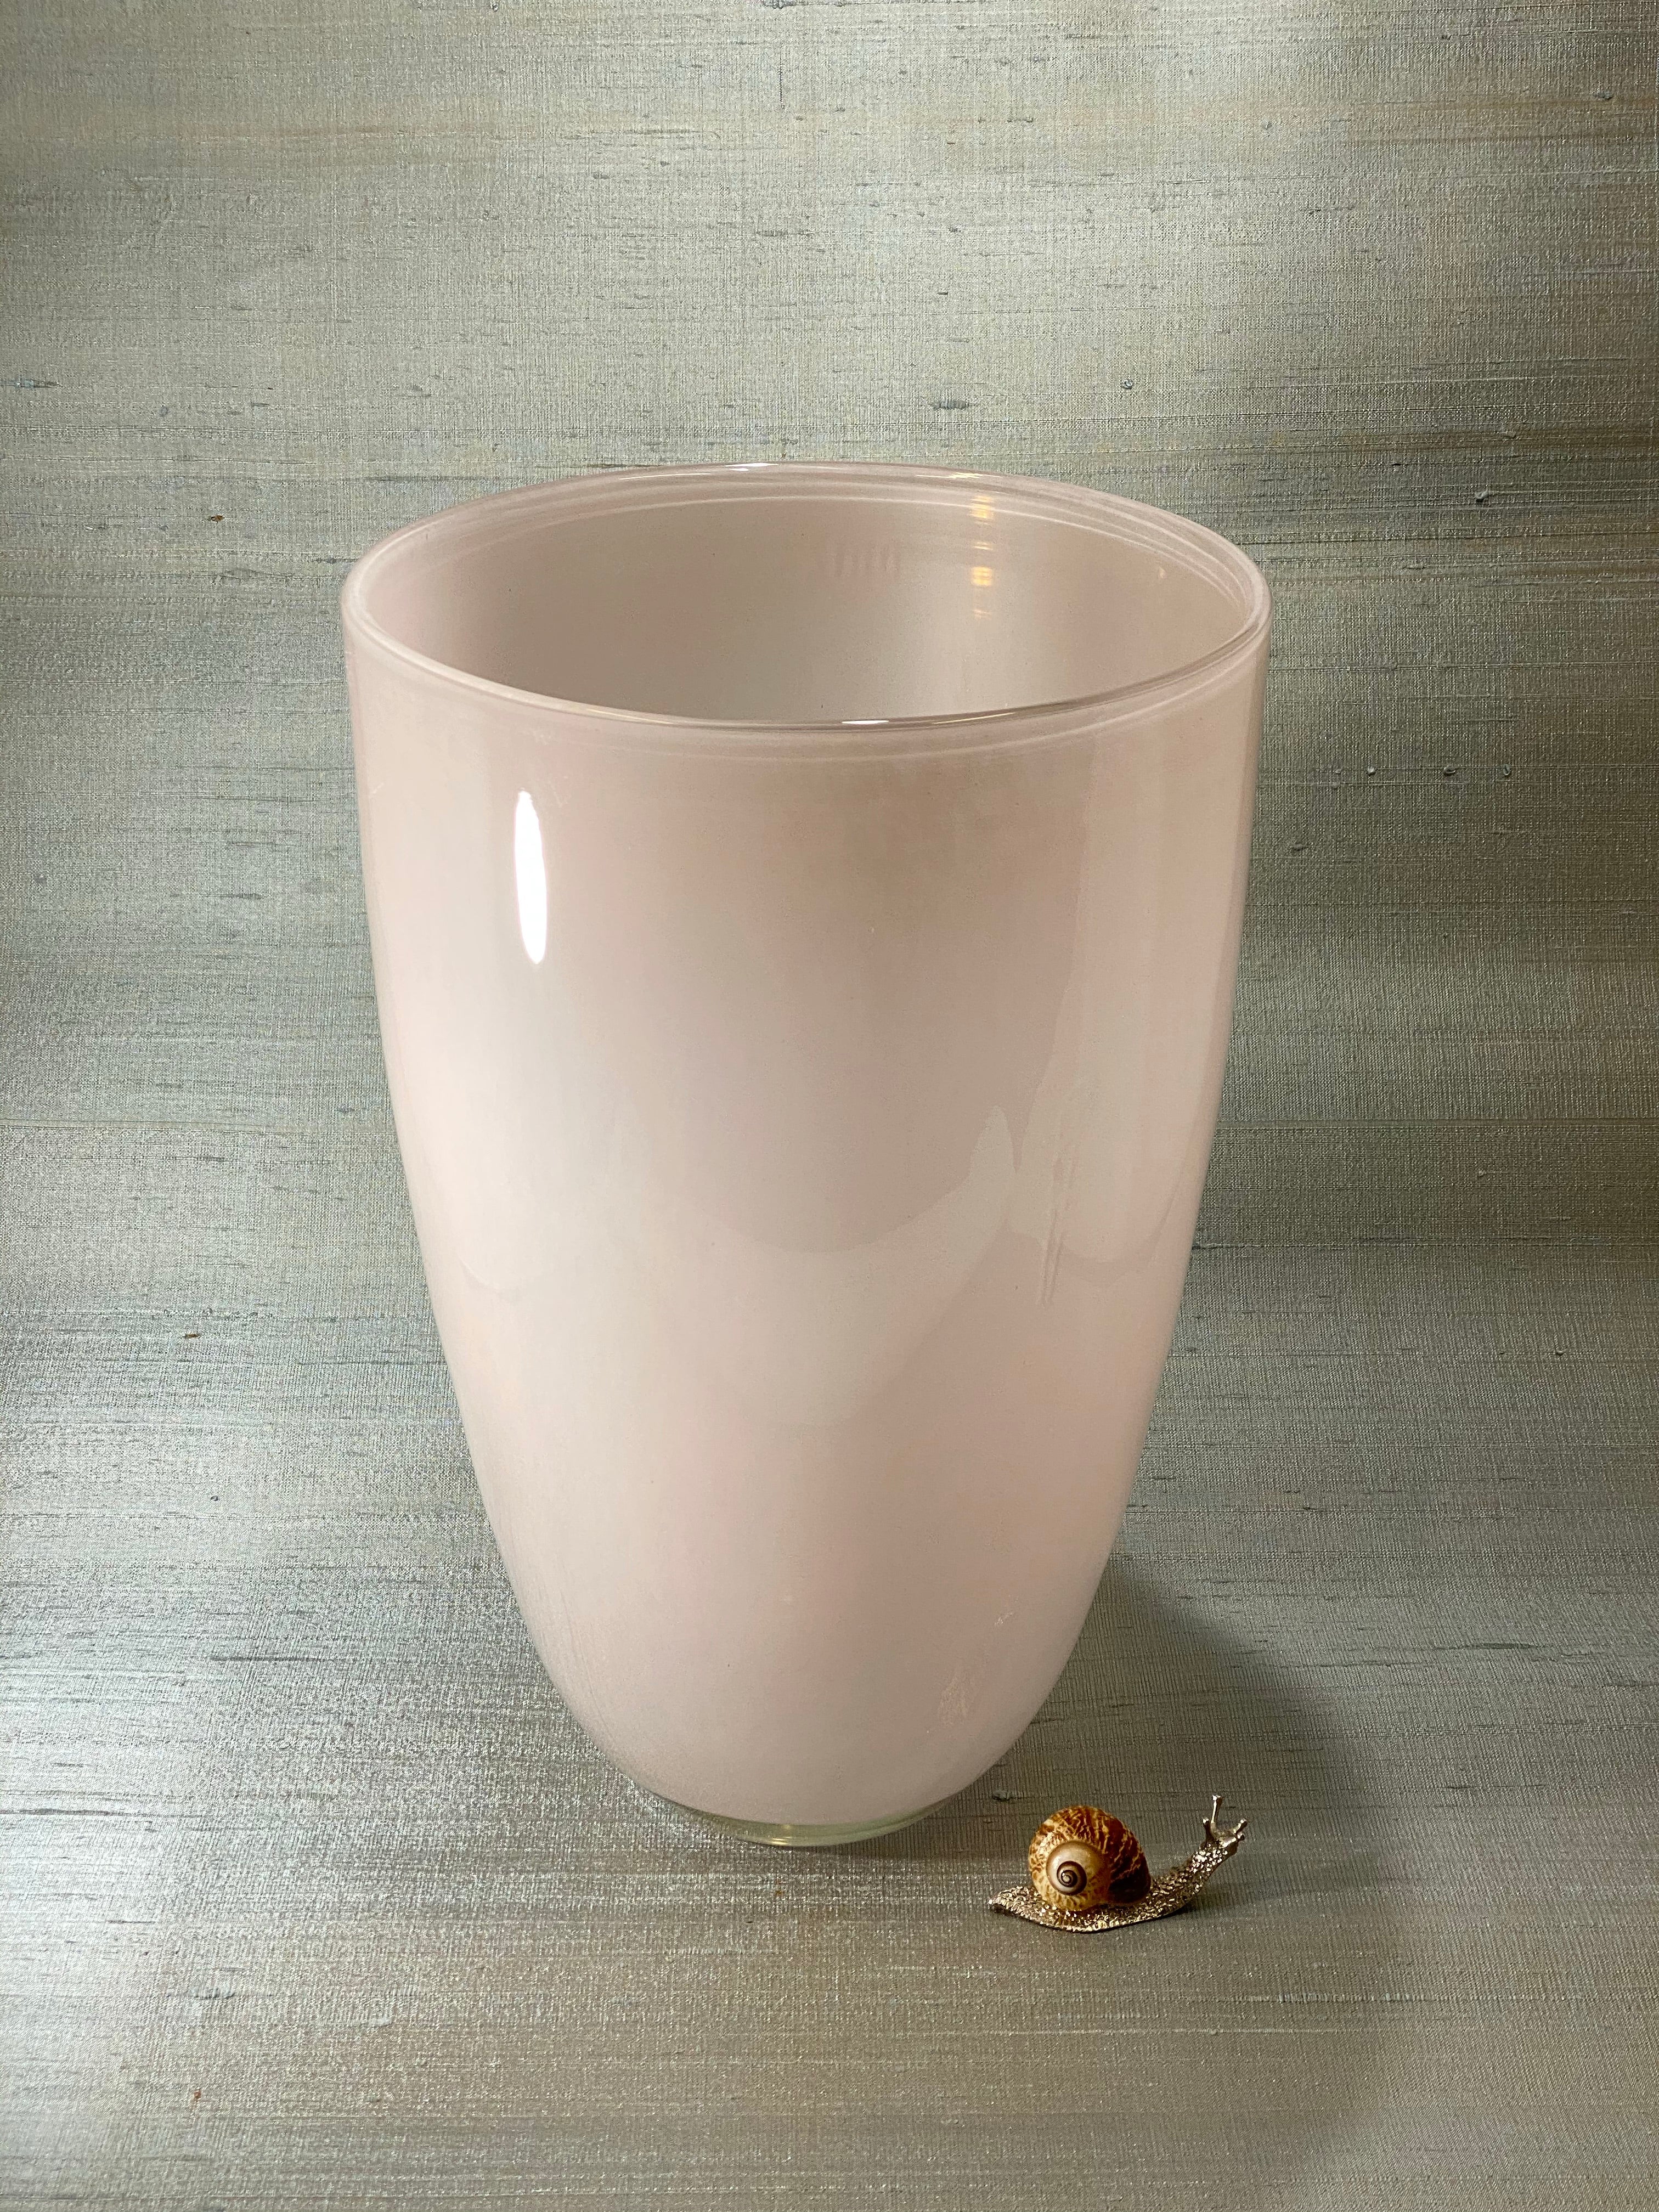 Dutz Rozenvaas Pastel Roze L / Rosevase Pastel Pink - Vaas / Vase